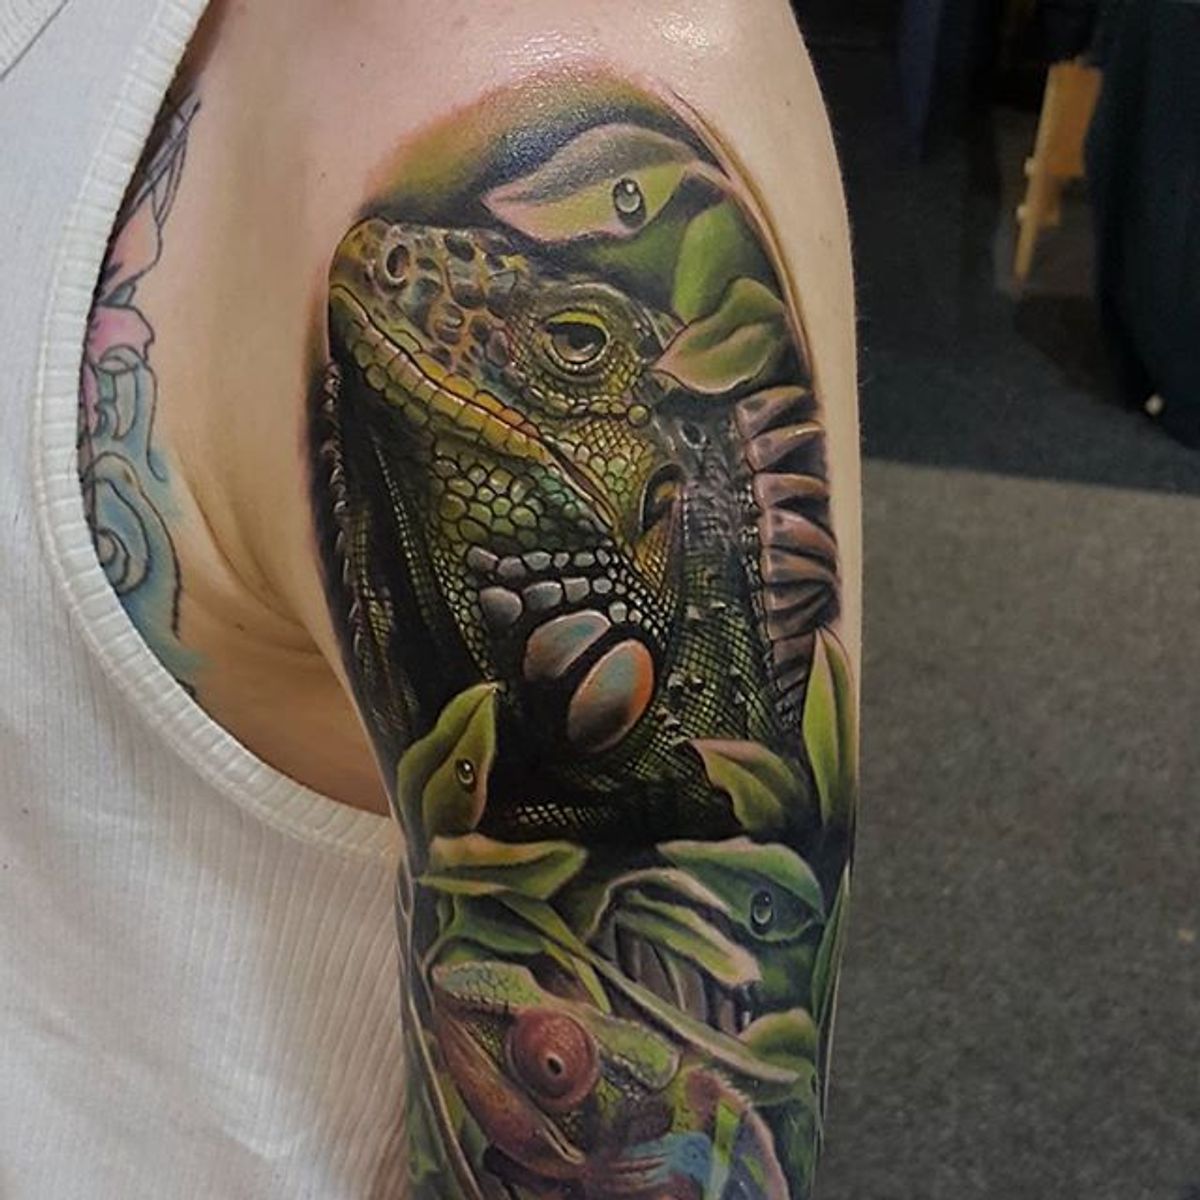 Tattoo uploaded by Robert Davies • Iguana Tattoo by Adam Blakey #iguana  #iguanatattoo #lizardtattoo #lizardtattoos #reptiletattoo #reptiletattoos  #reptile #lizard #realisticlizard #realisticiguana #AdamBlakey • Tattoodo